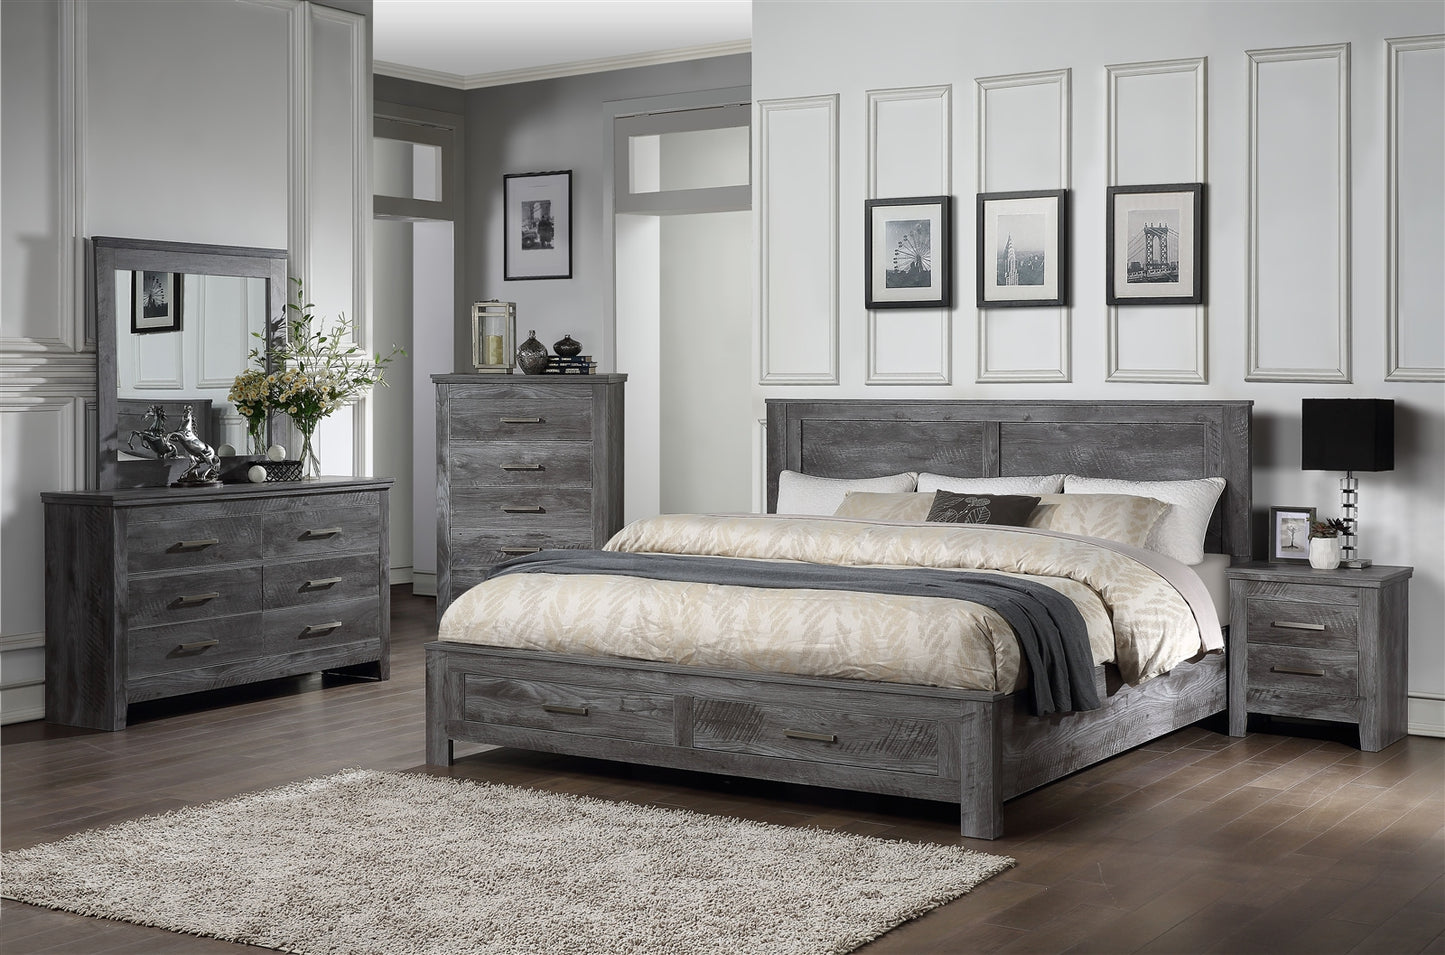 Vidalia King Storage Bed in Rustic Gray